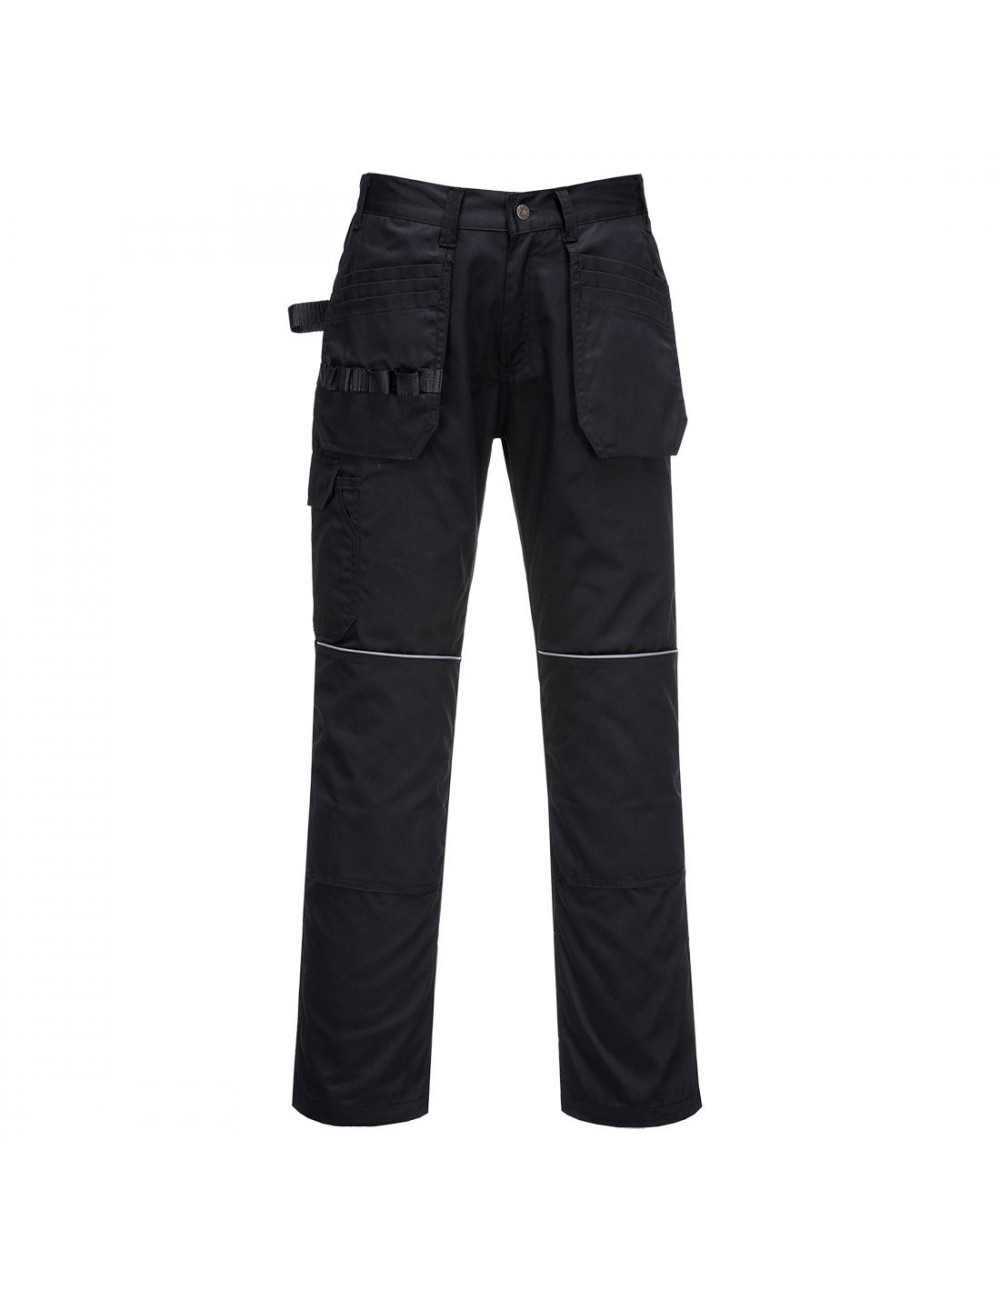 Tradesman black tall trousers Portwest